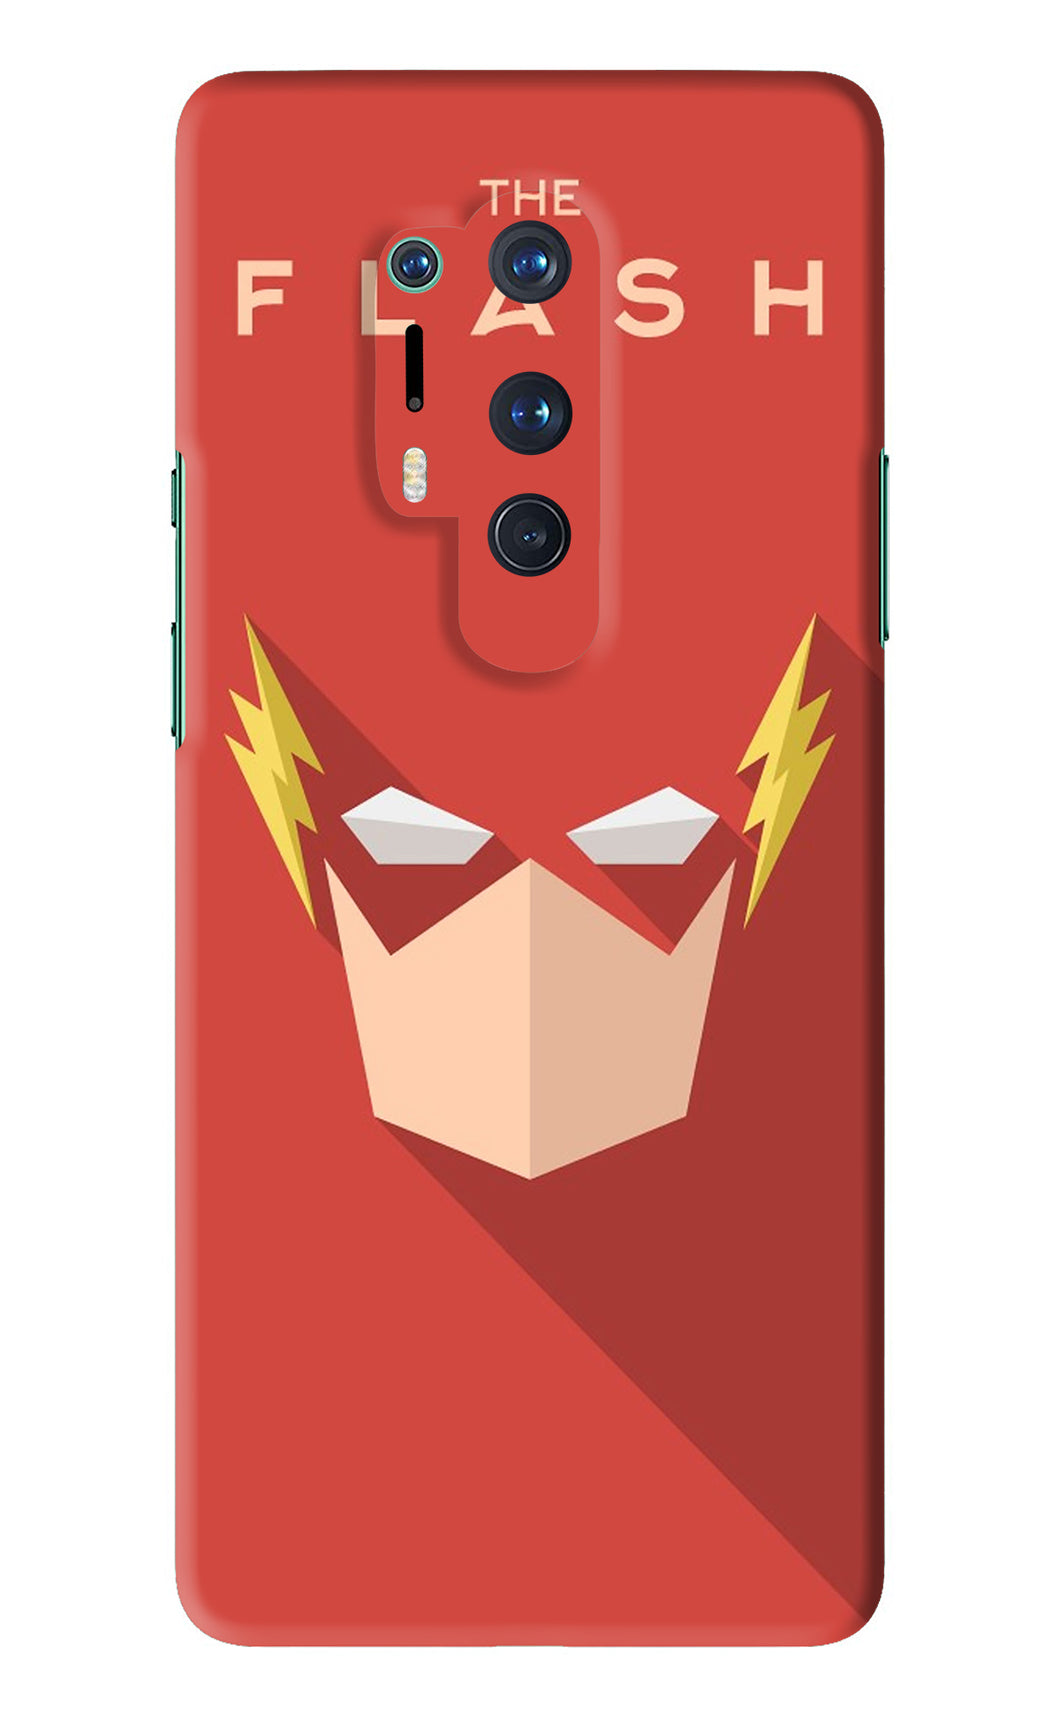 The Flash OnePlus 8 Pro Back Skin Wrap